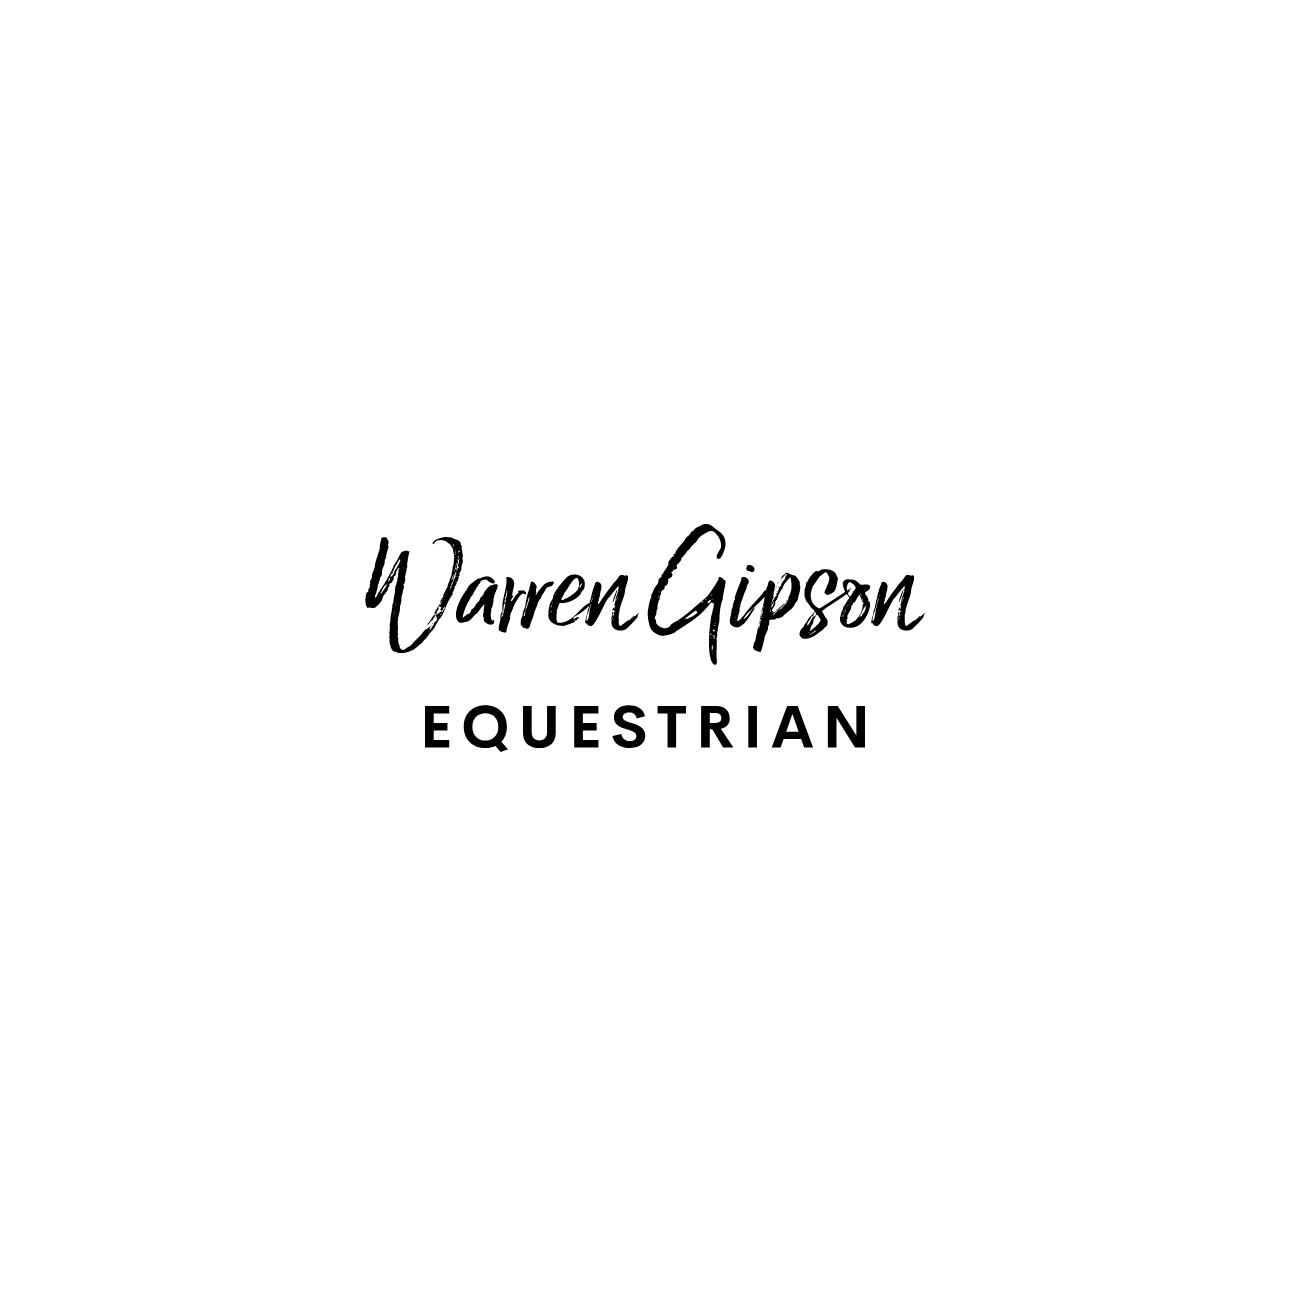 Warren Gipson Equestrian